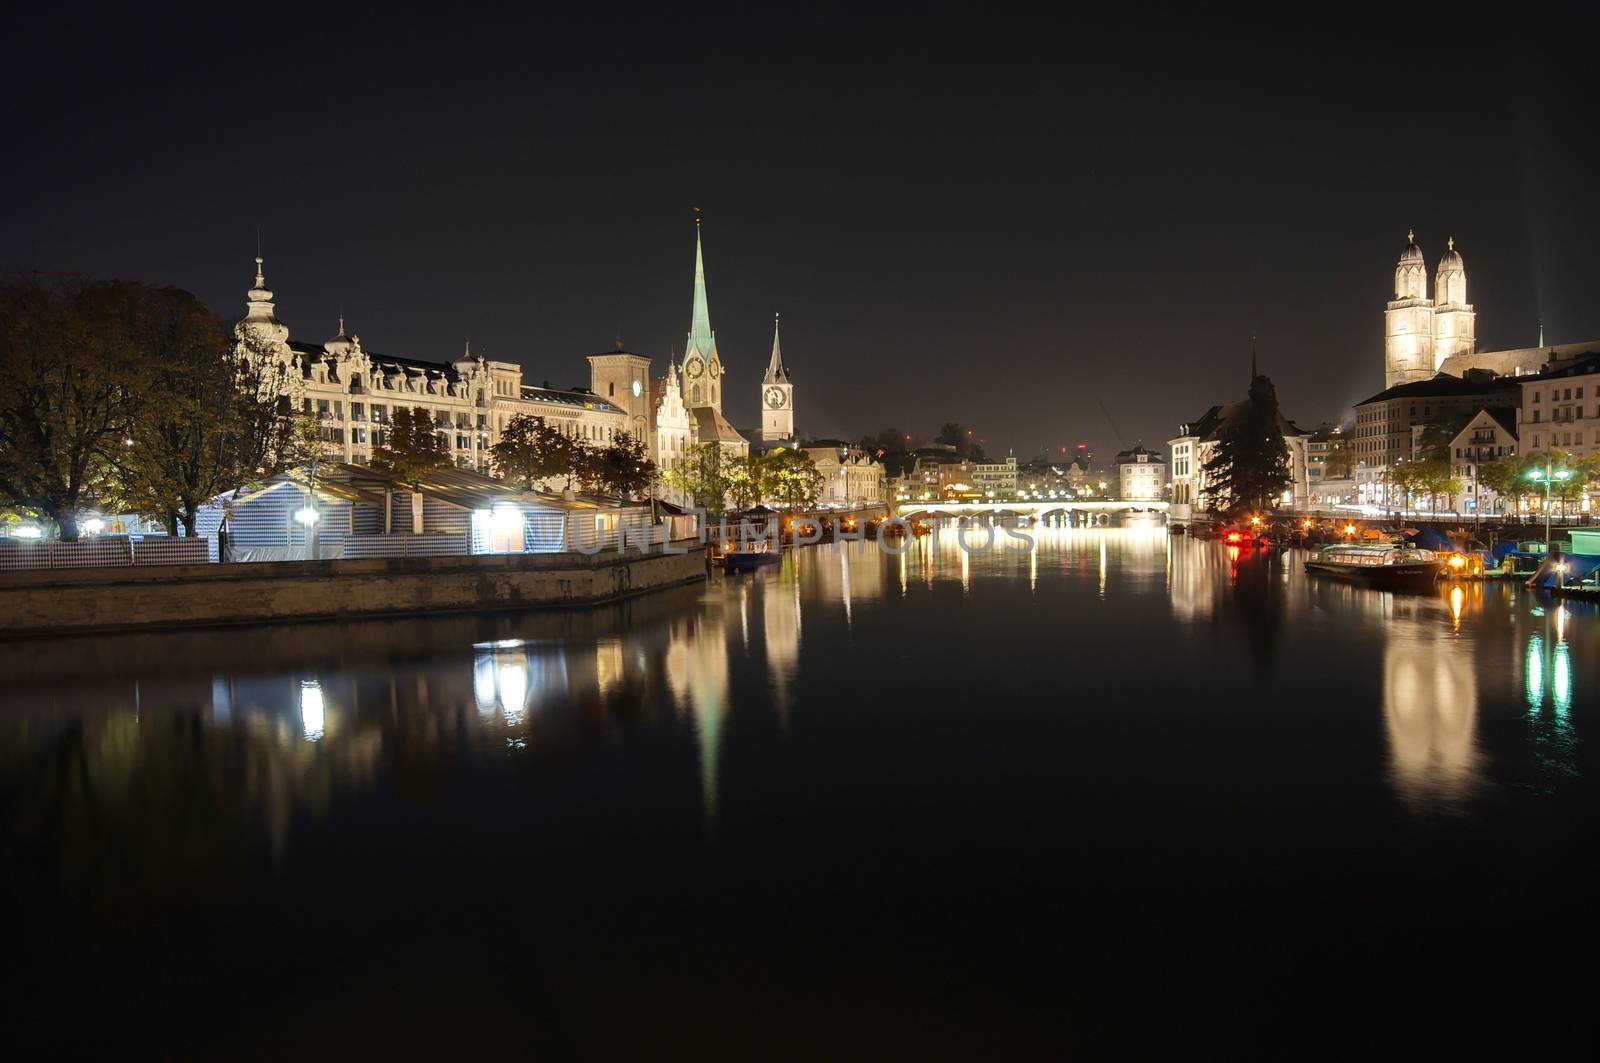 Zürich at dark night by anderm